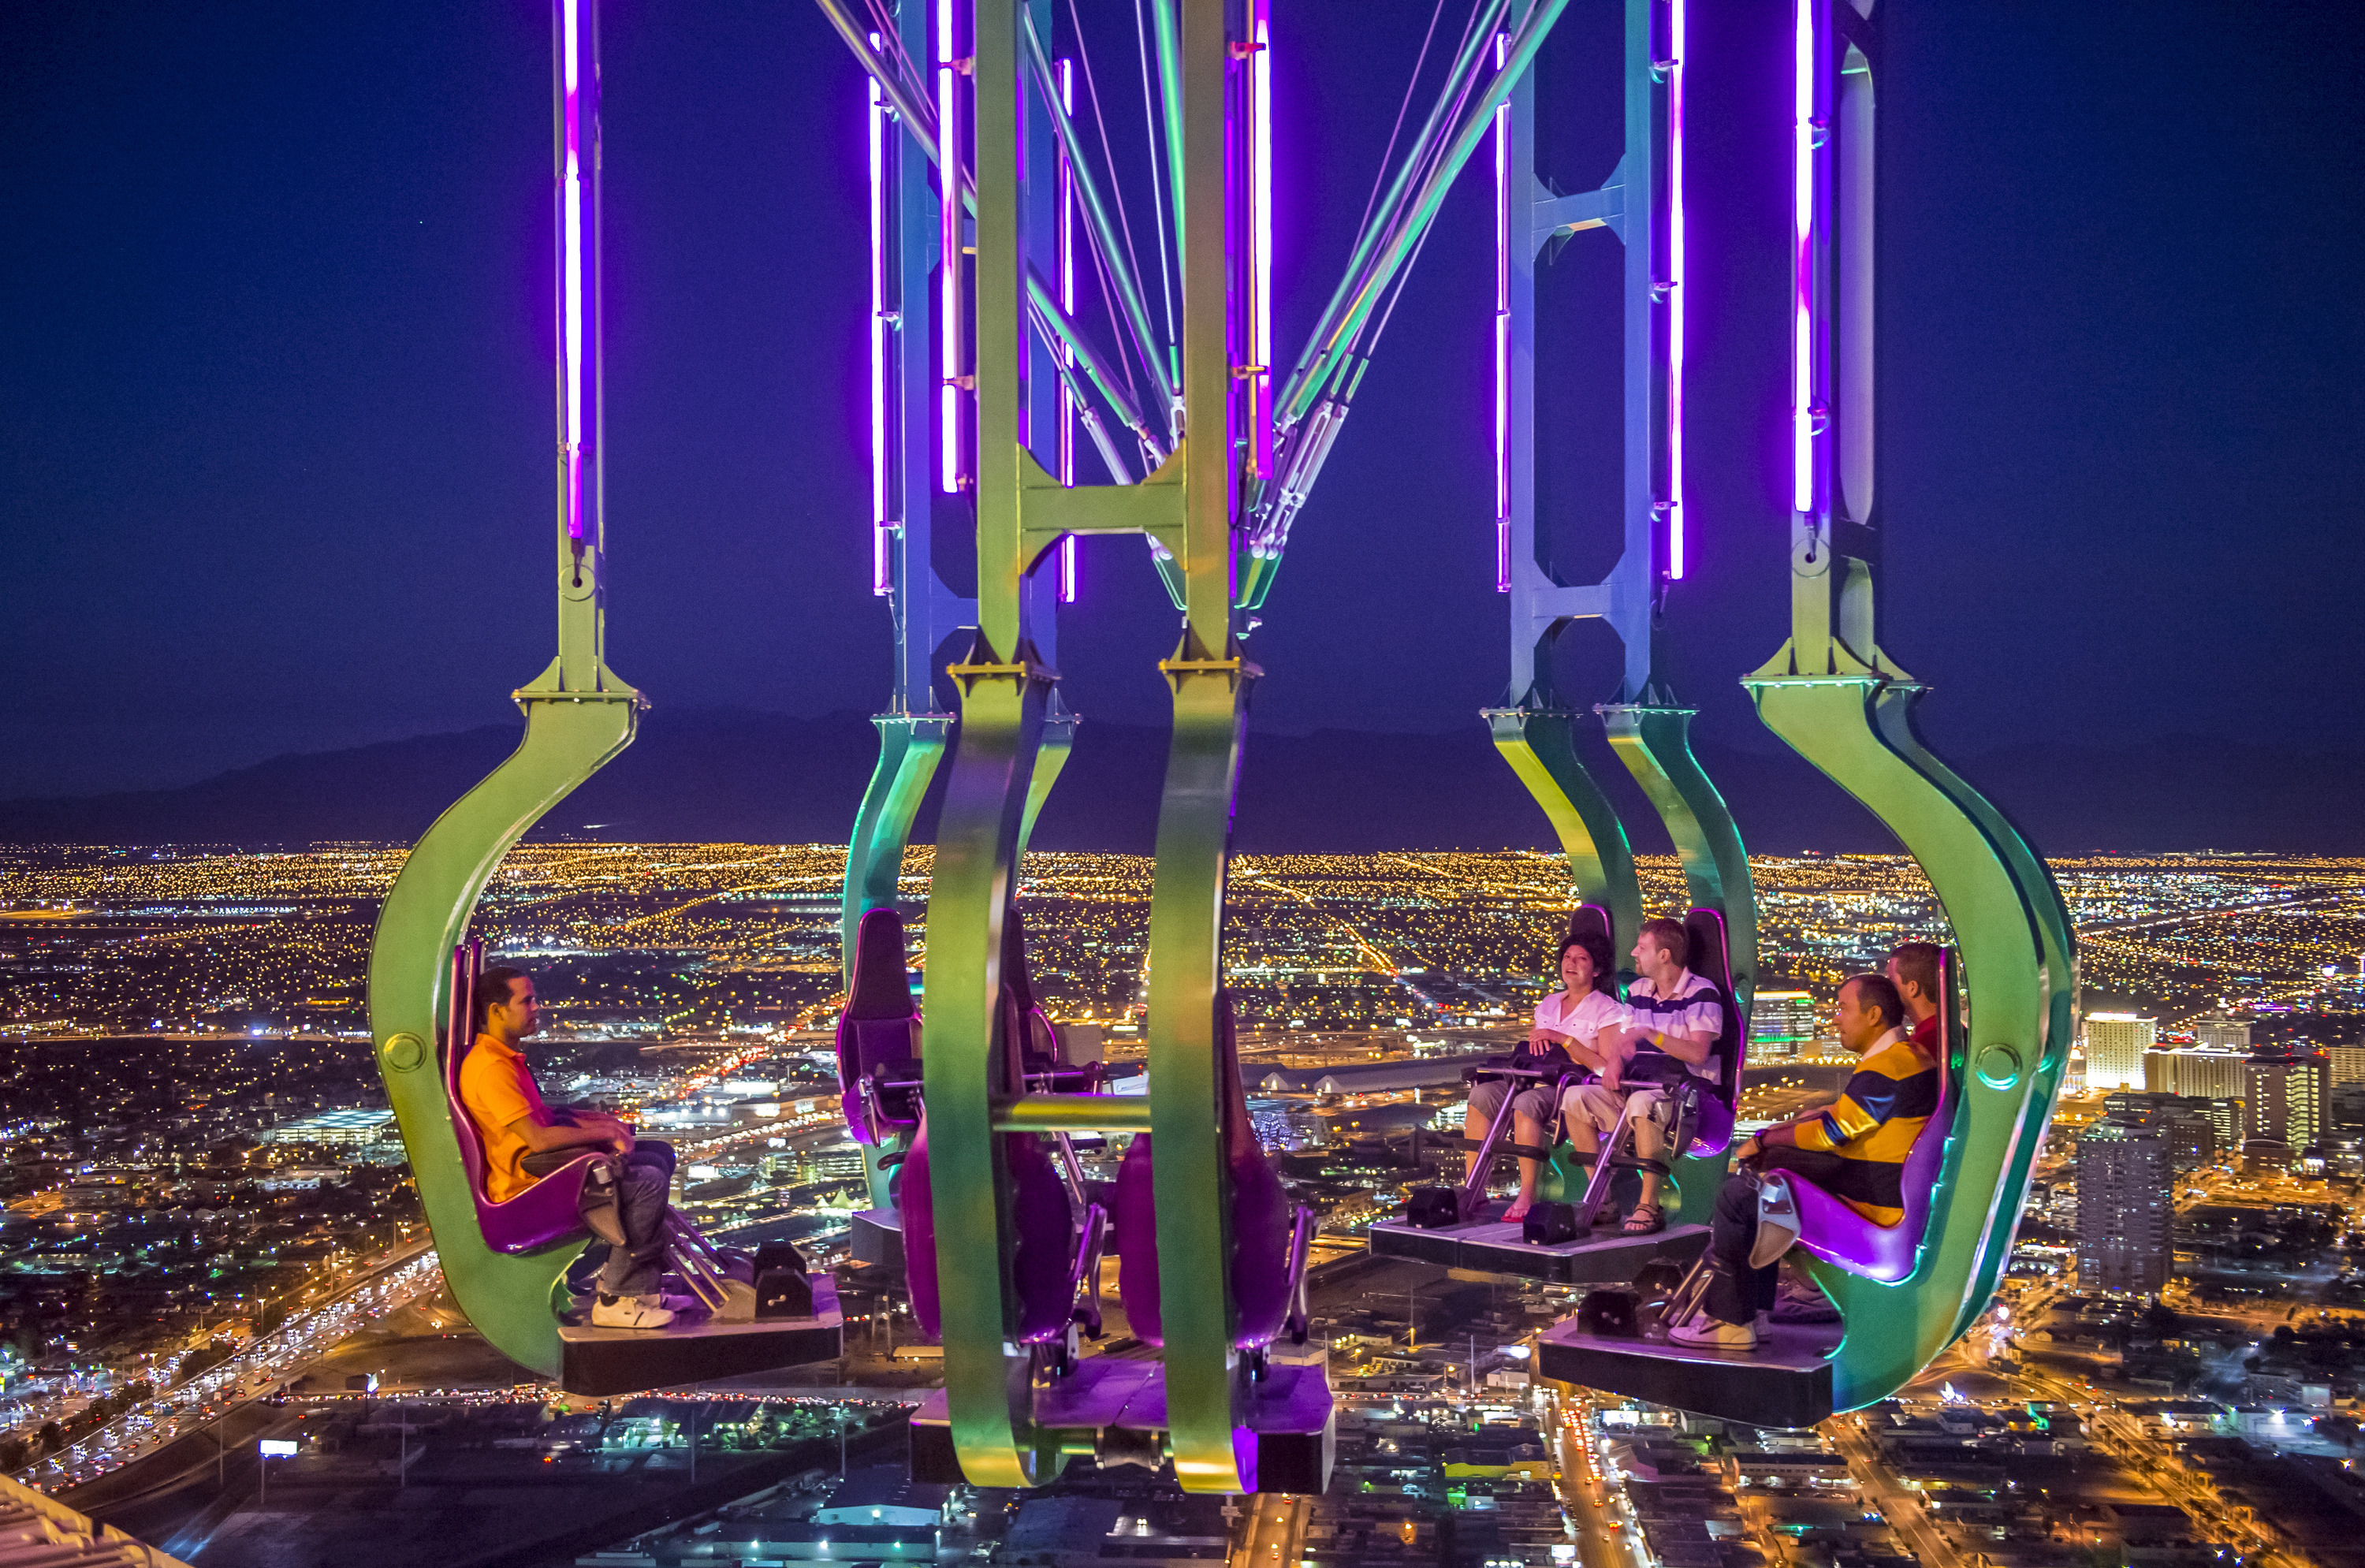 Las Vegas Stratosphere Hotel Big Shot Ride 